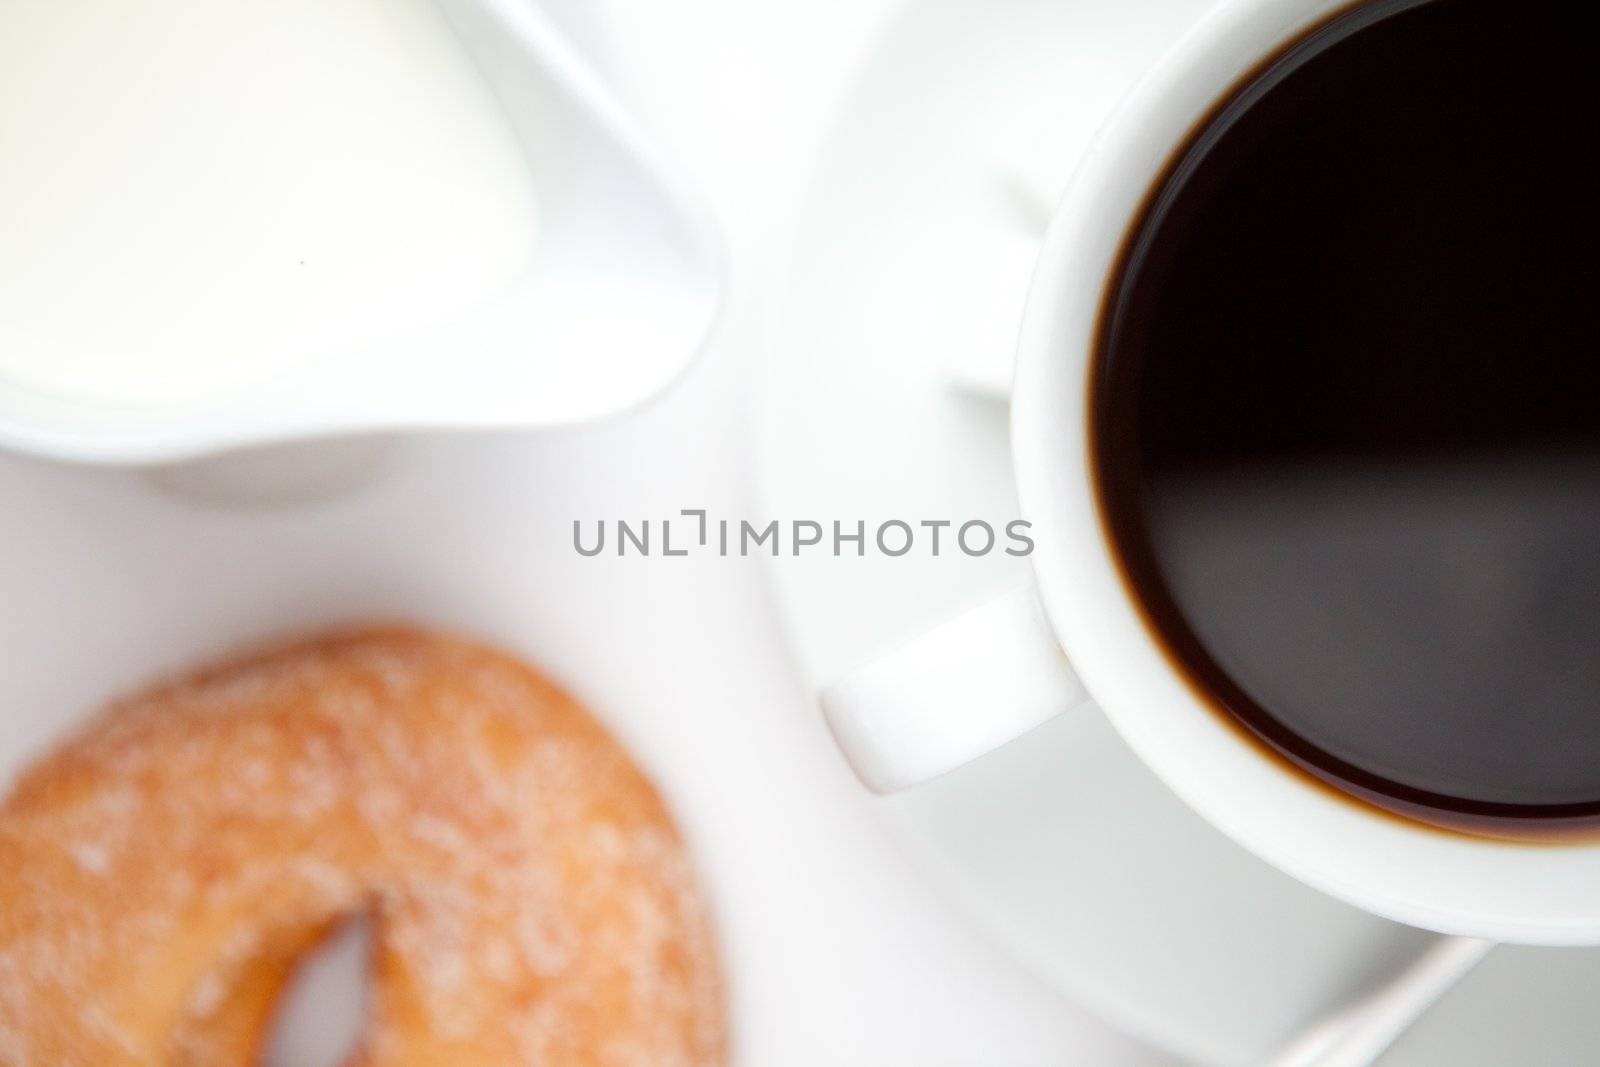 Espresso with doughnut against a white background